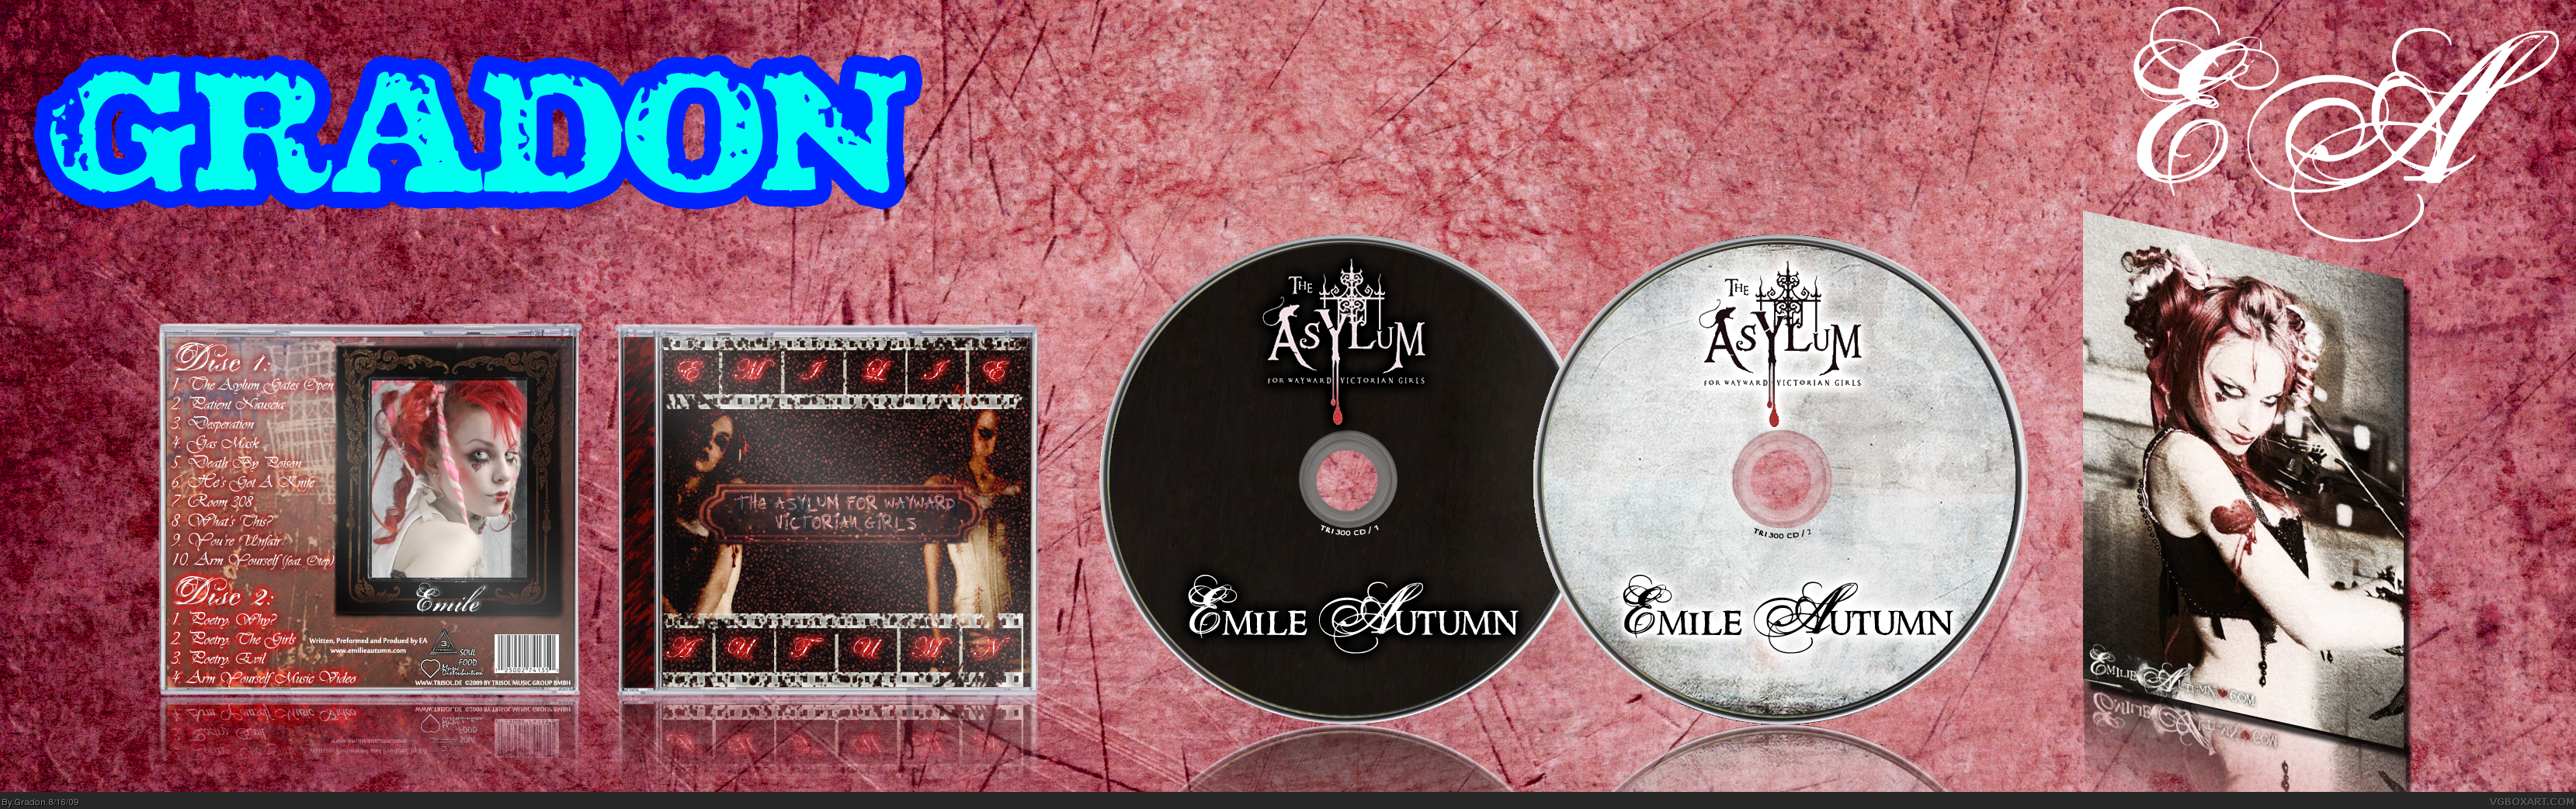 Emilie Autumn: Asylum For Wayward Victorian Girls box cover